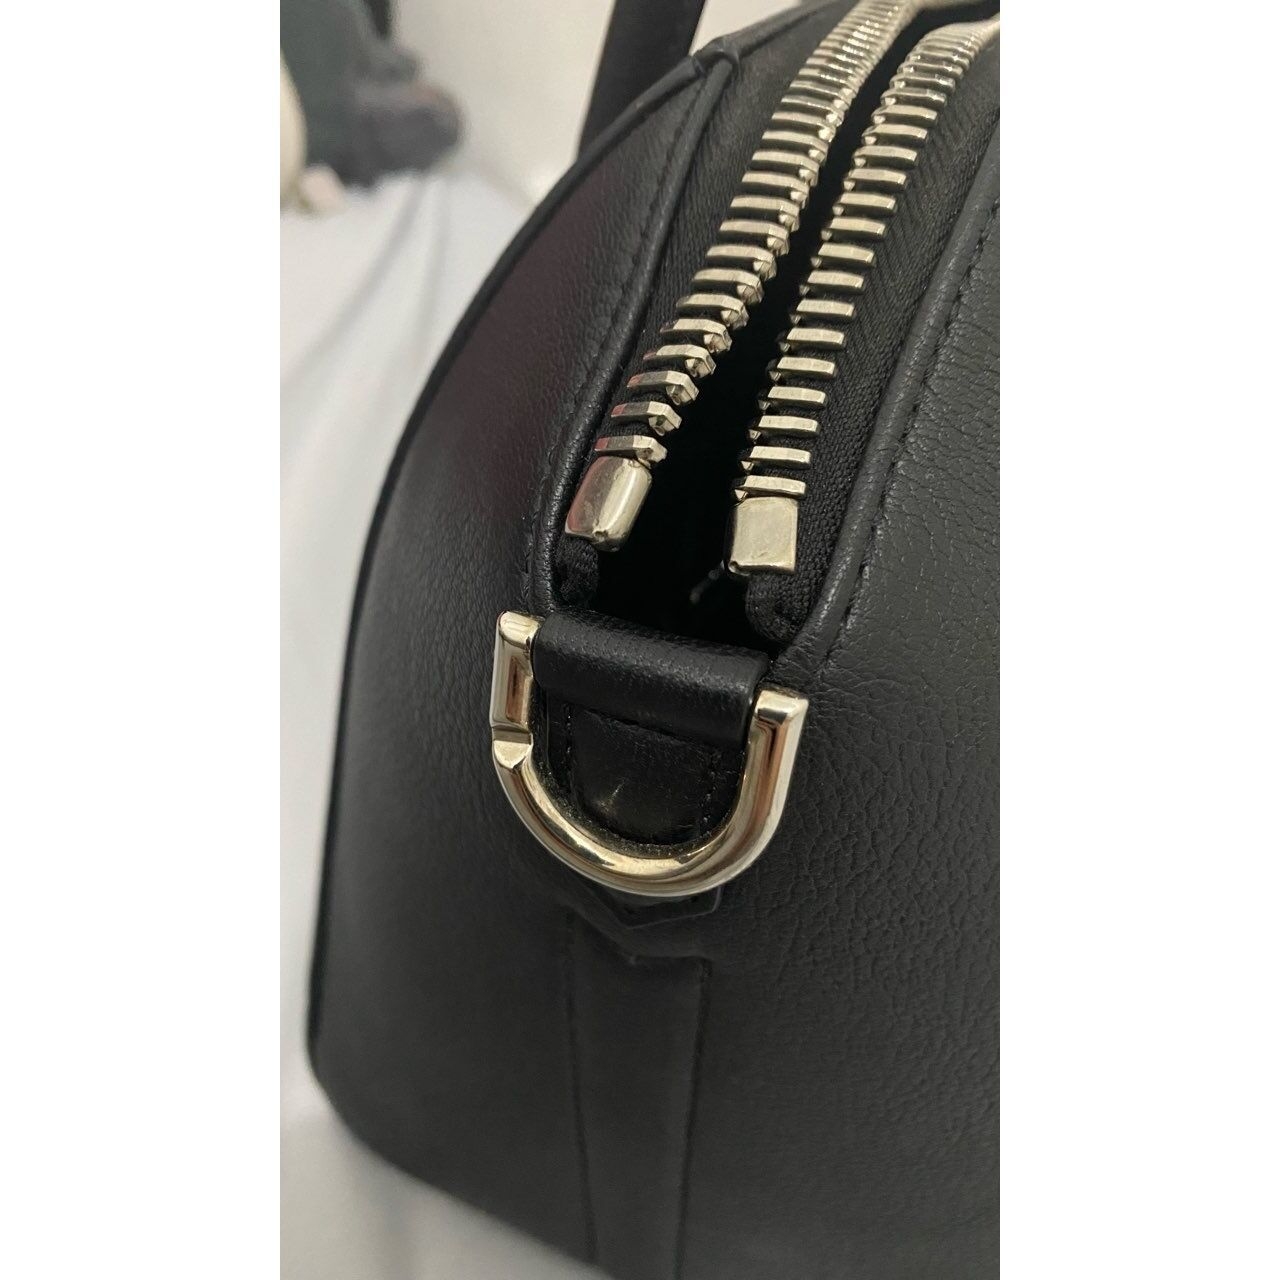 Givenchy Antigona Small Black Handbag